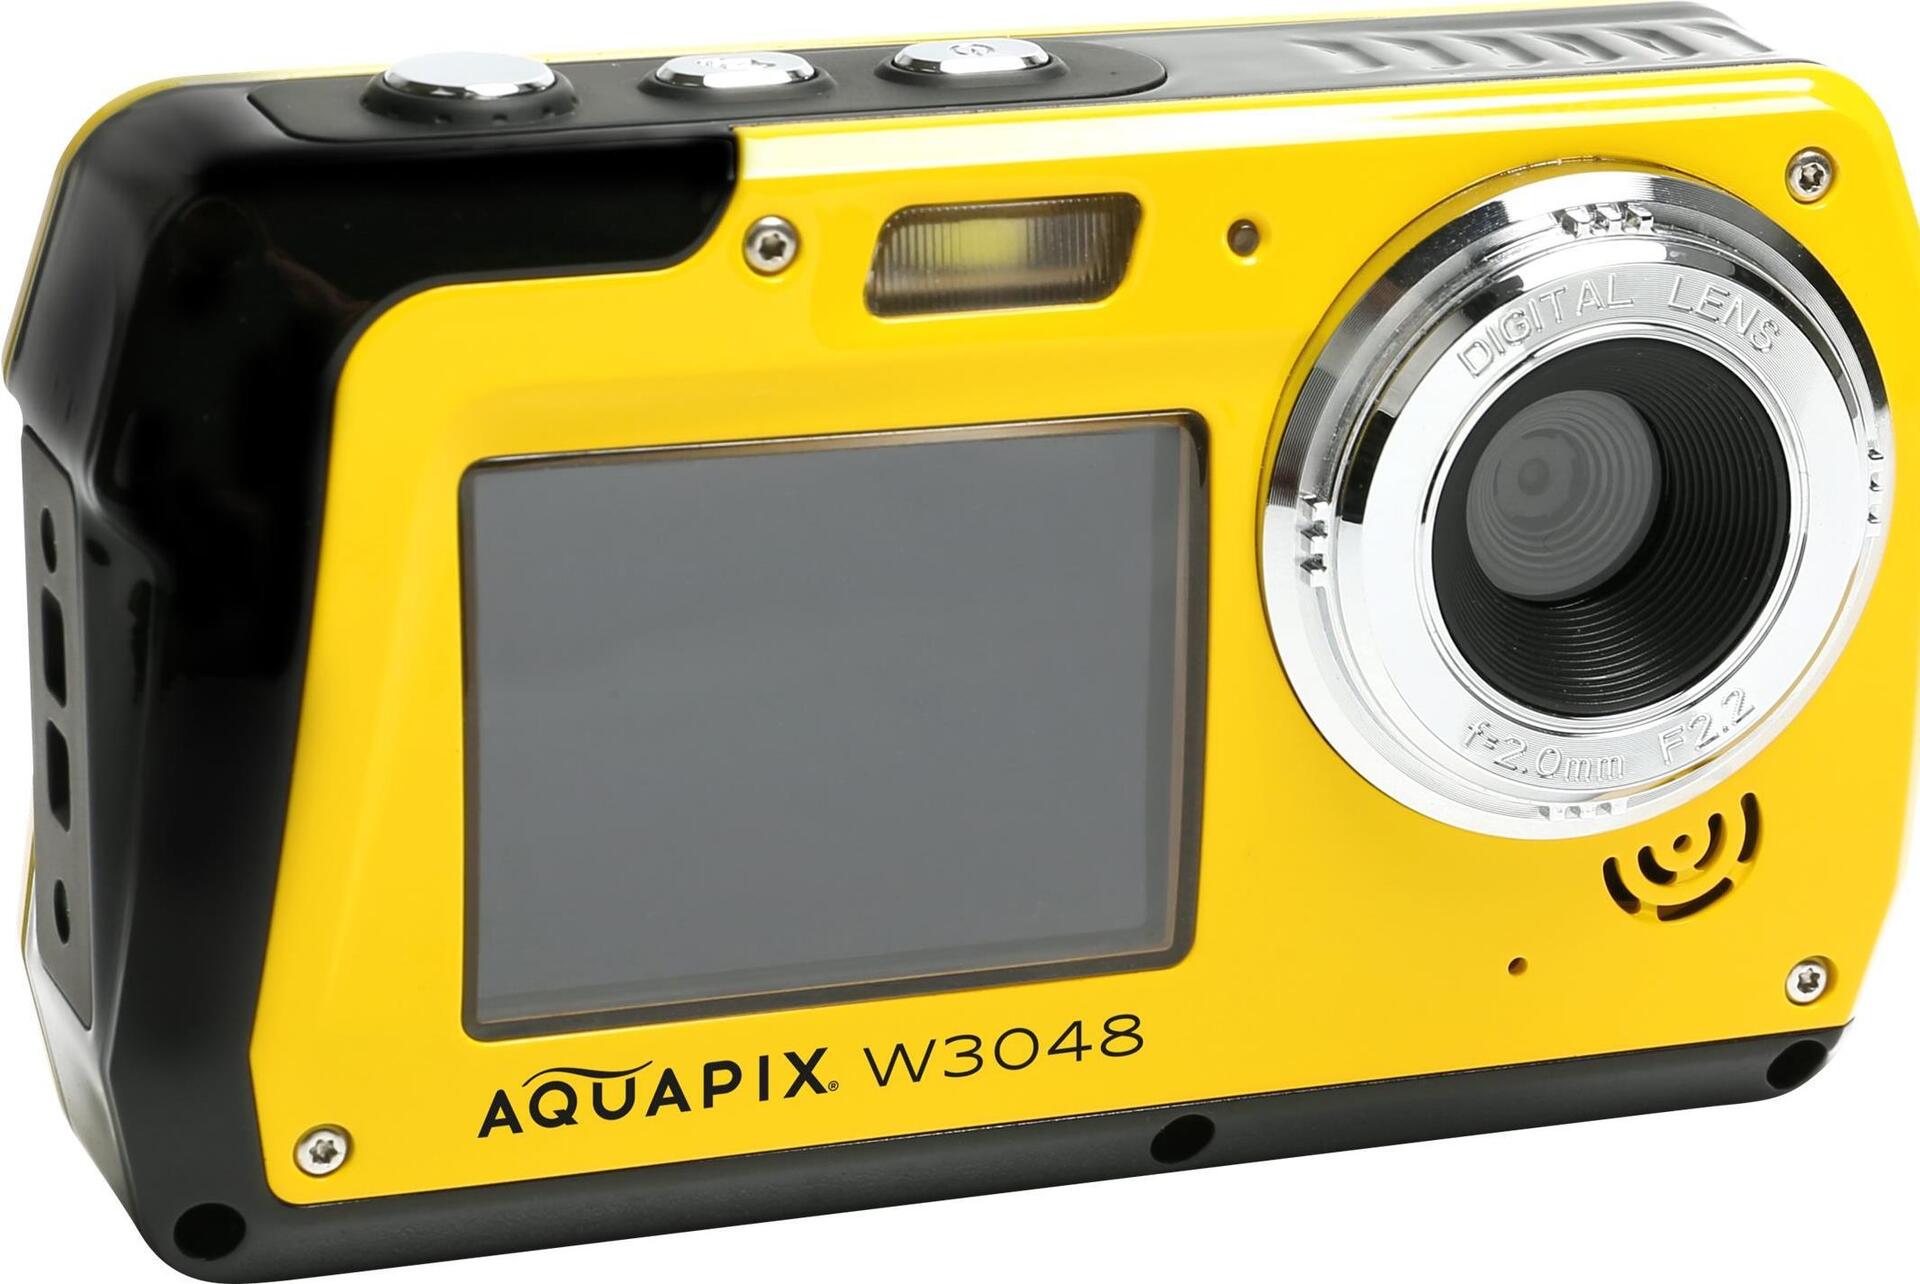 EASYPIX Aquapix W3048 Edge yellow